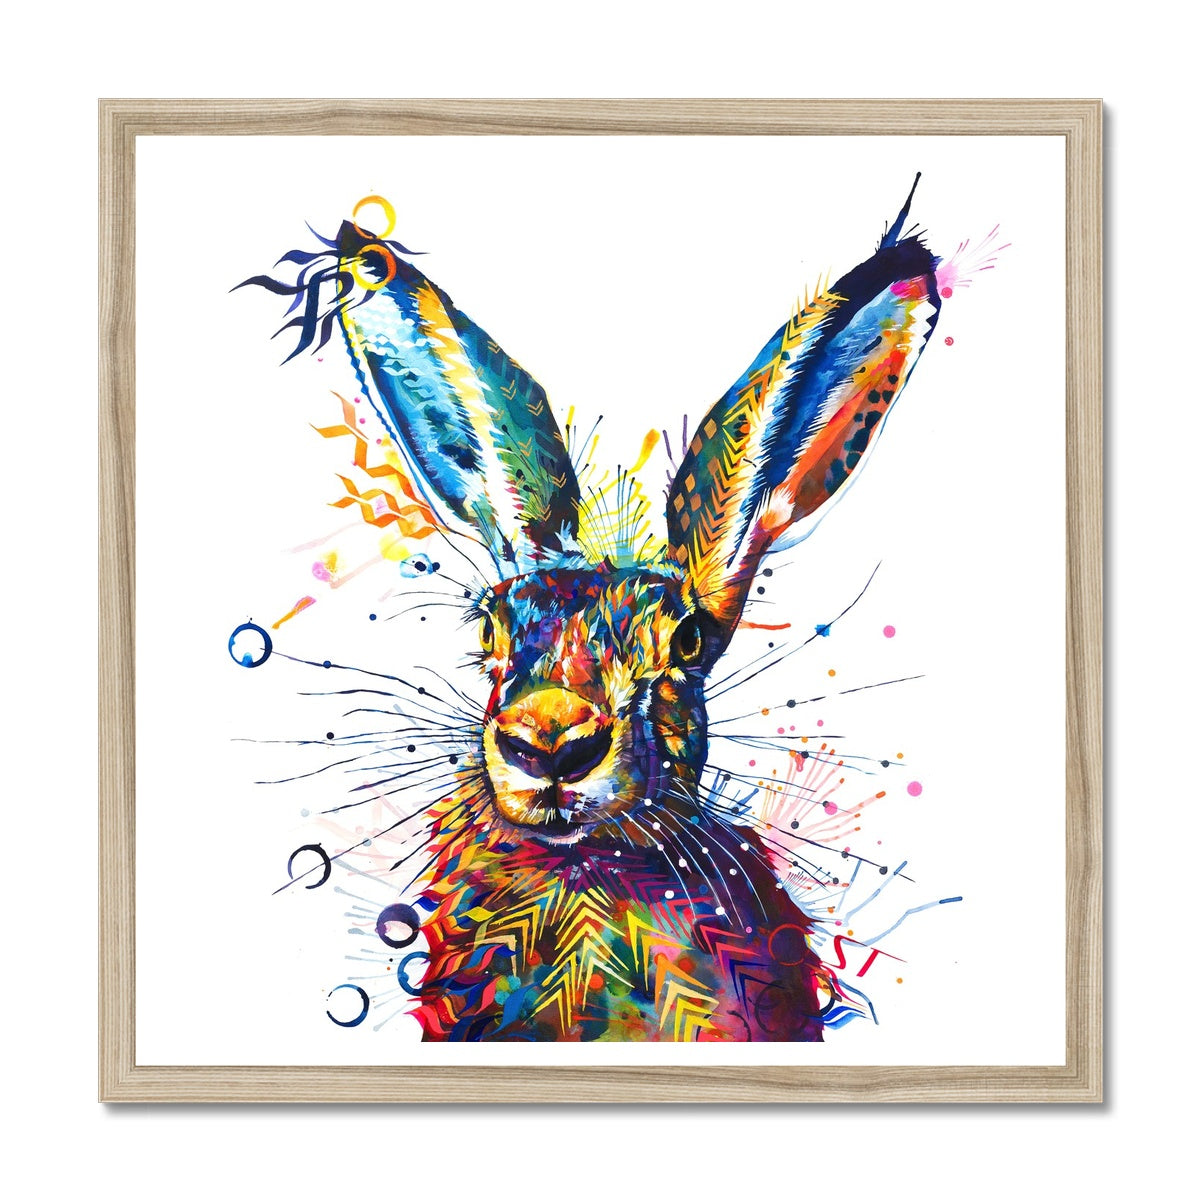 Hartley the Hare Framed Print